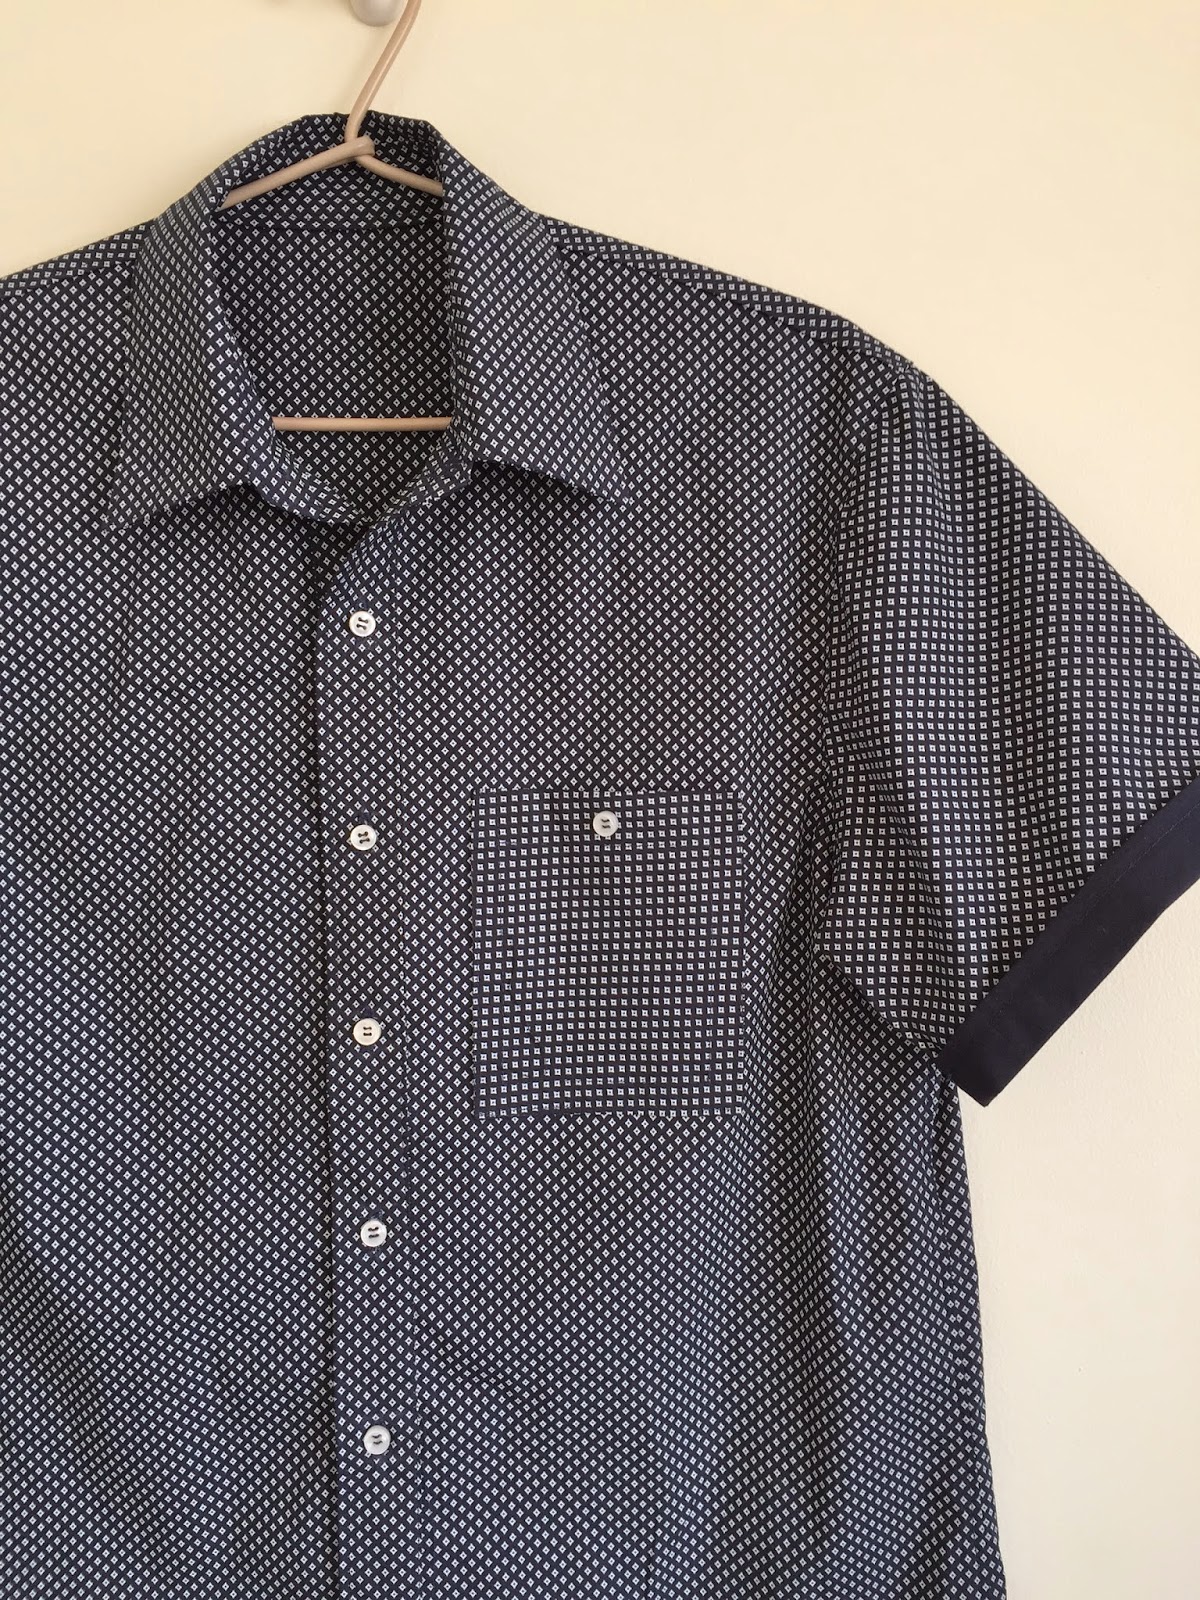 Sewn By Elizabeth: Simplicity 1544: Short Sleeve Shirt for Tim